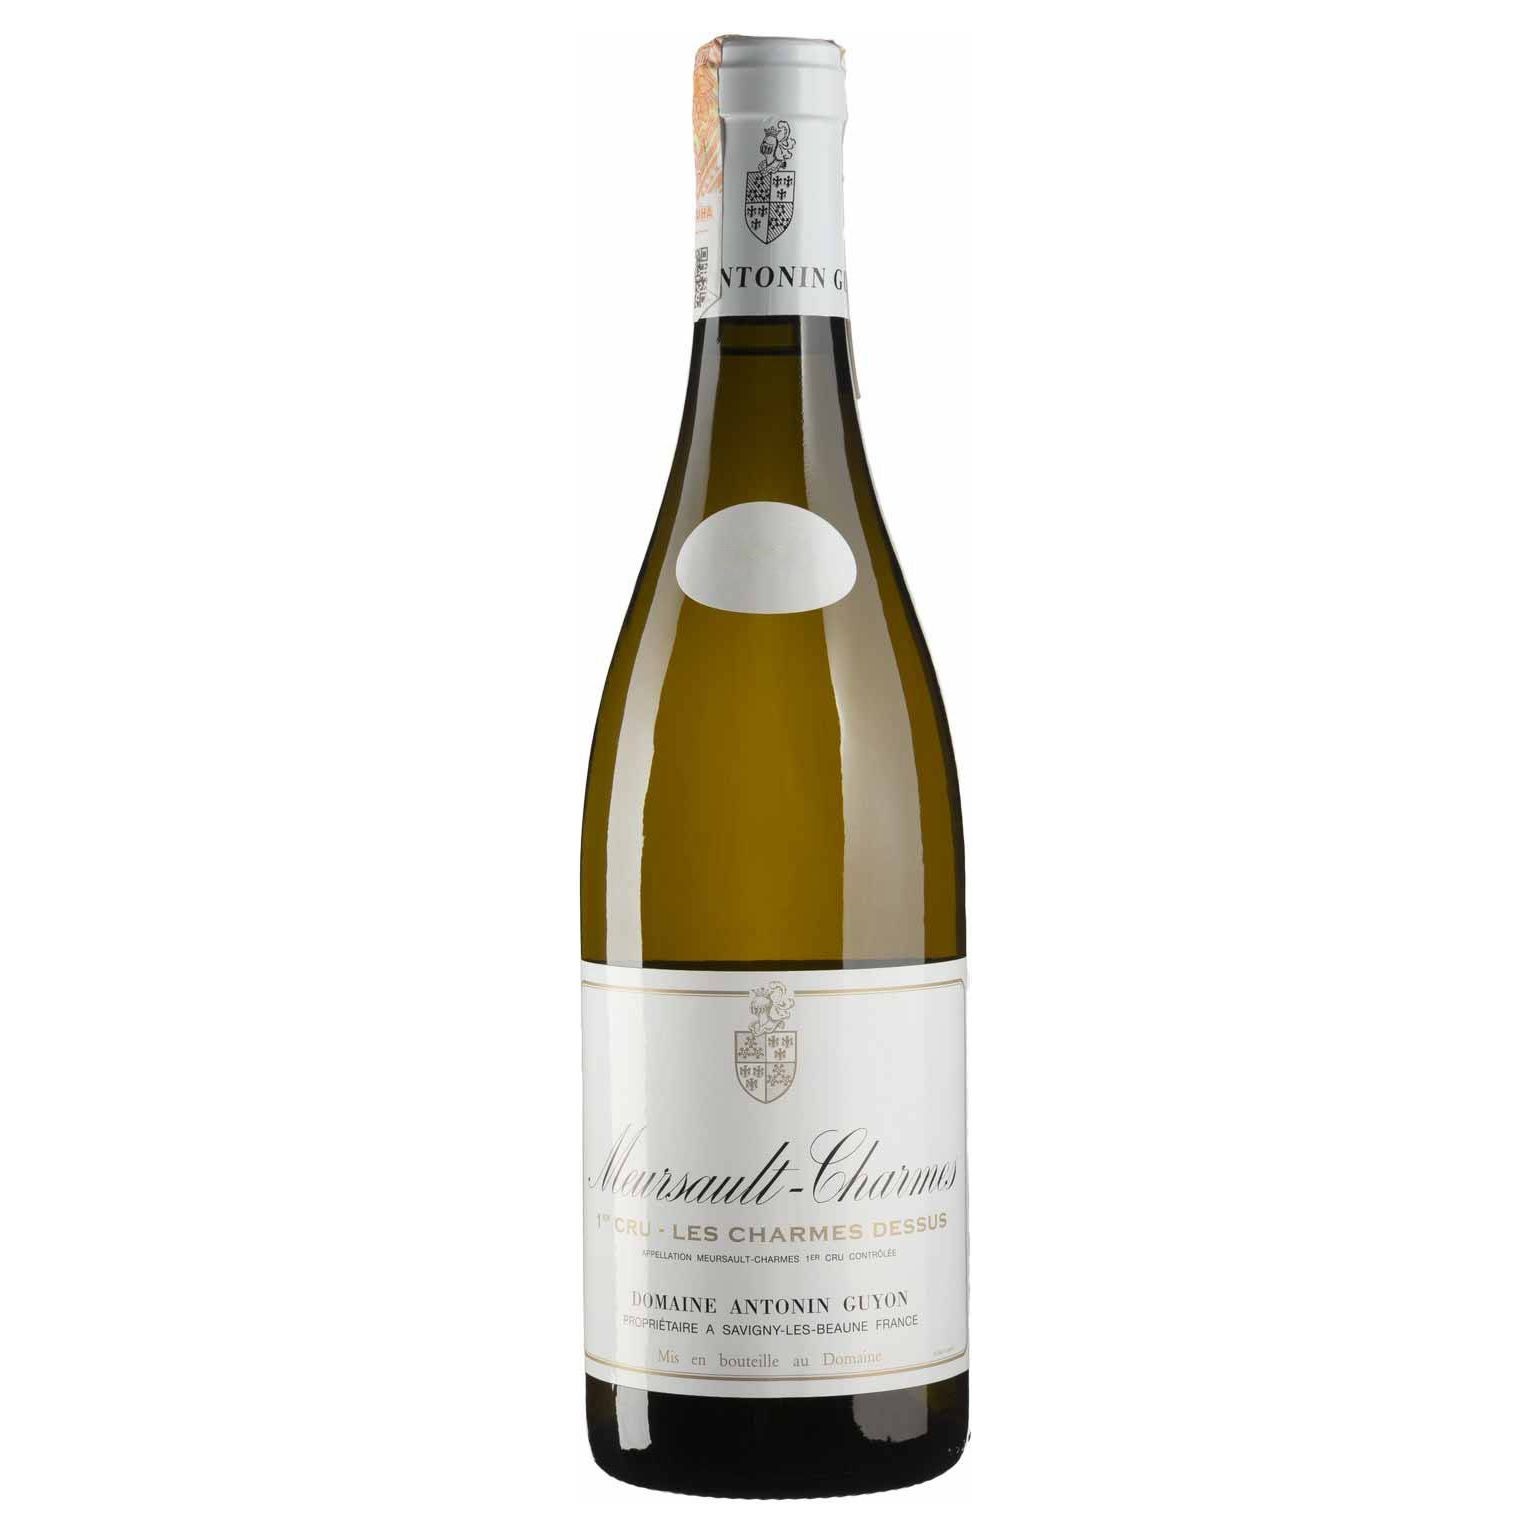 Вино Antonin Guyon Meursault-Charmes Les Charmes Dessus 2020, белое, сухое, 0,75 л (W7962) - фото 1